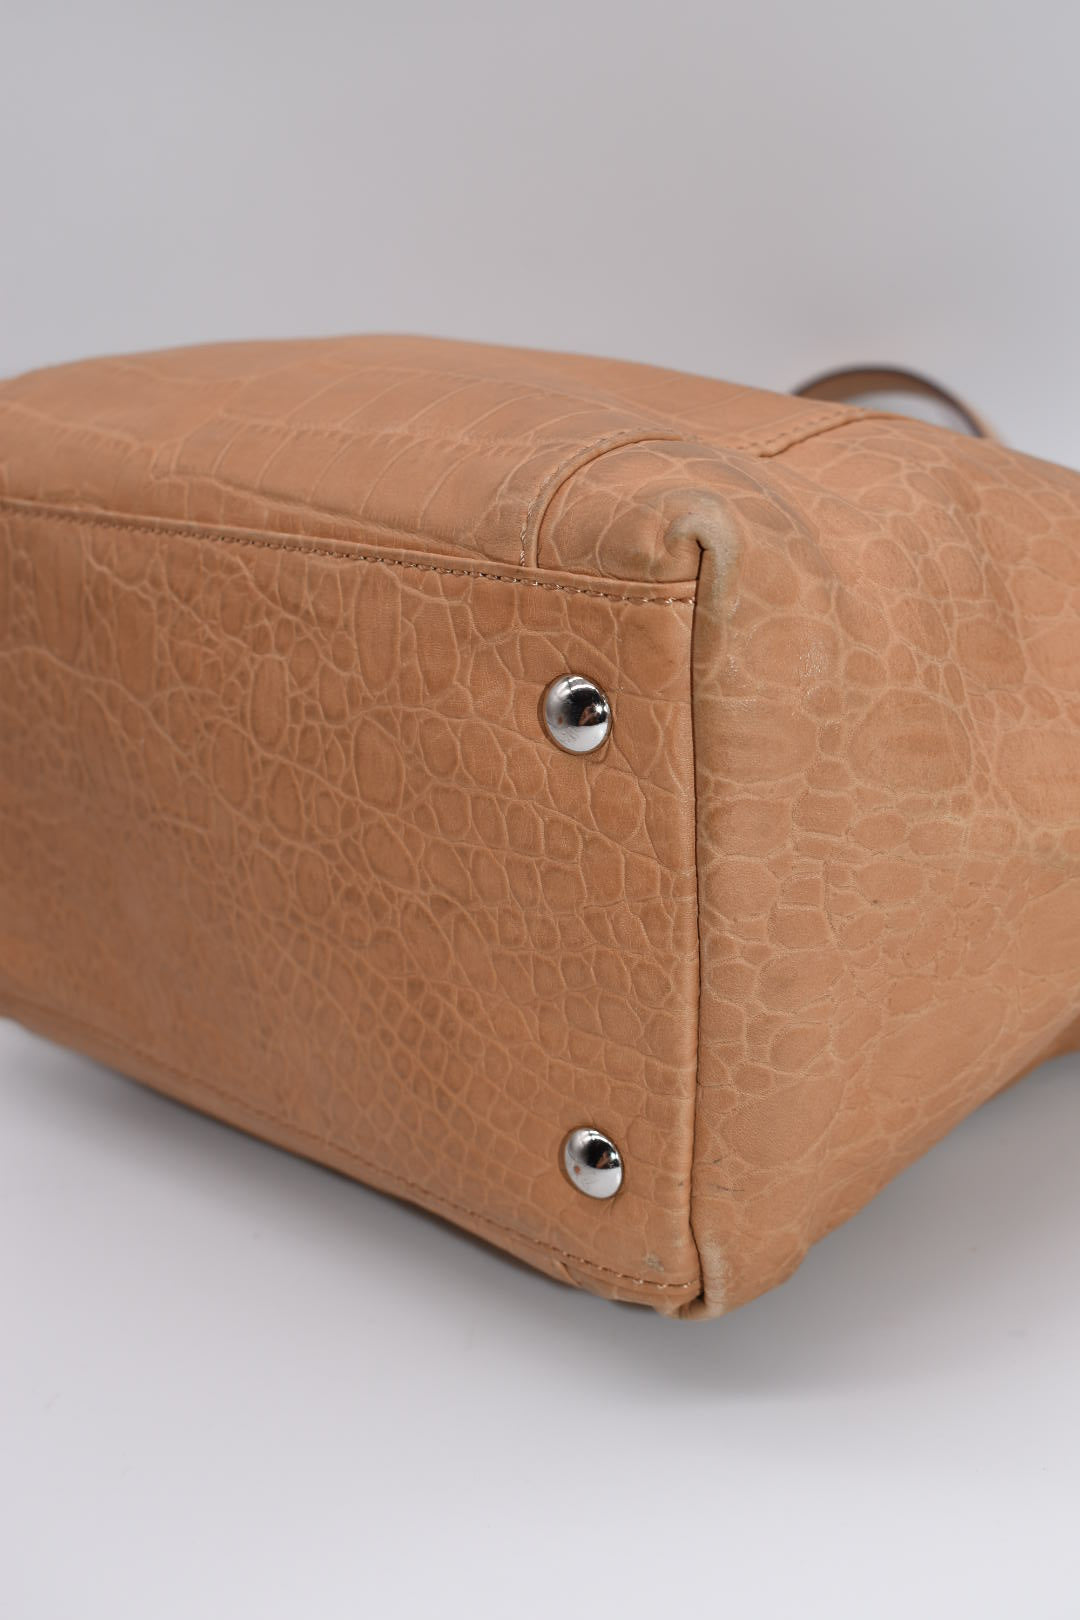 Michael Kors Leather Embossed Croc Tote Bag